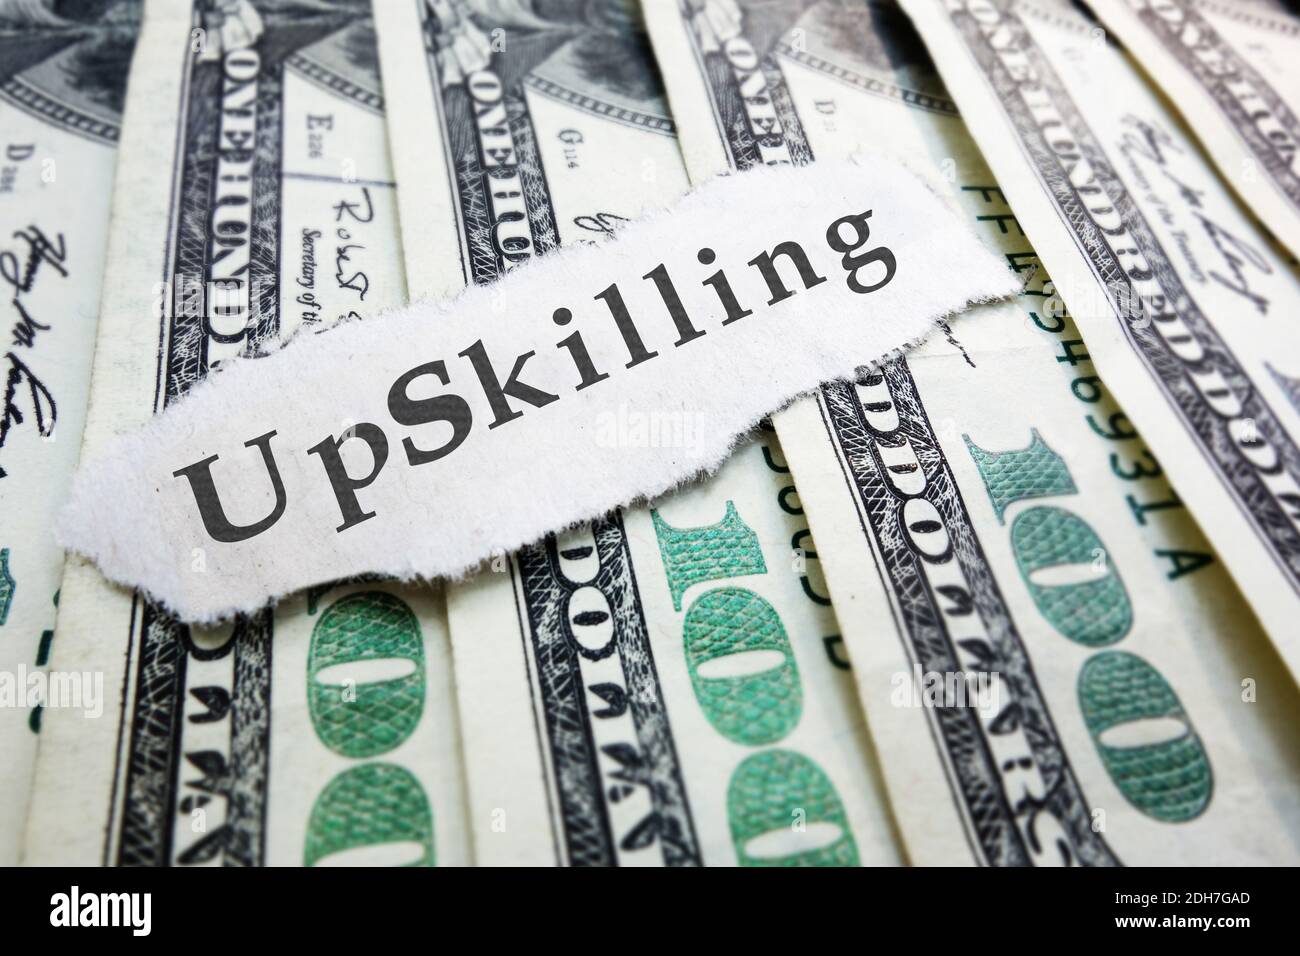 Upskilling and earn money Stock Photo